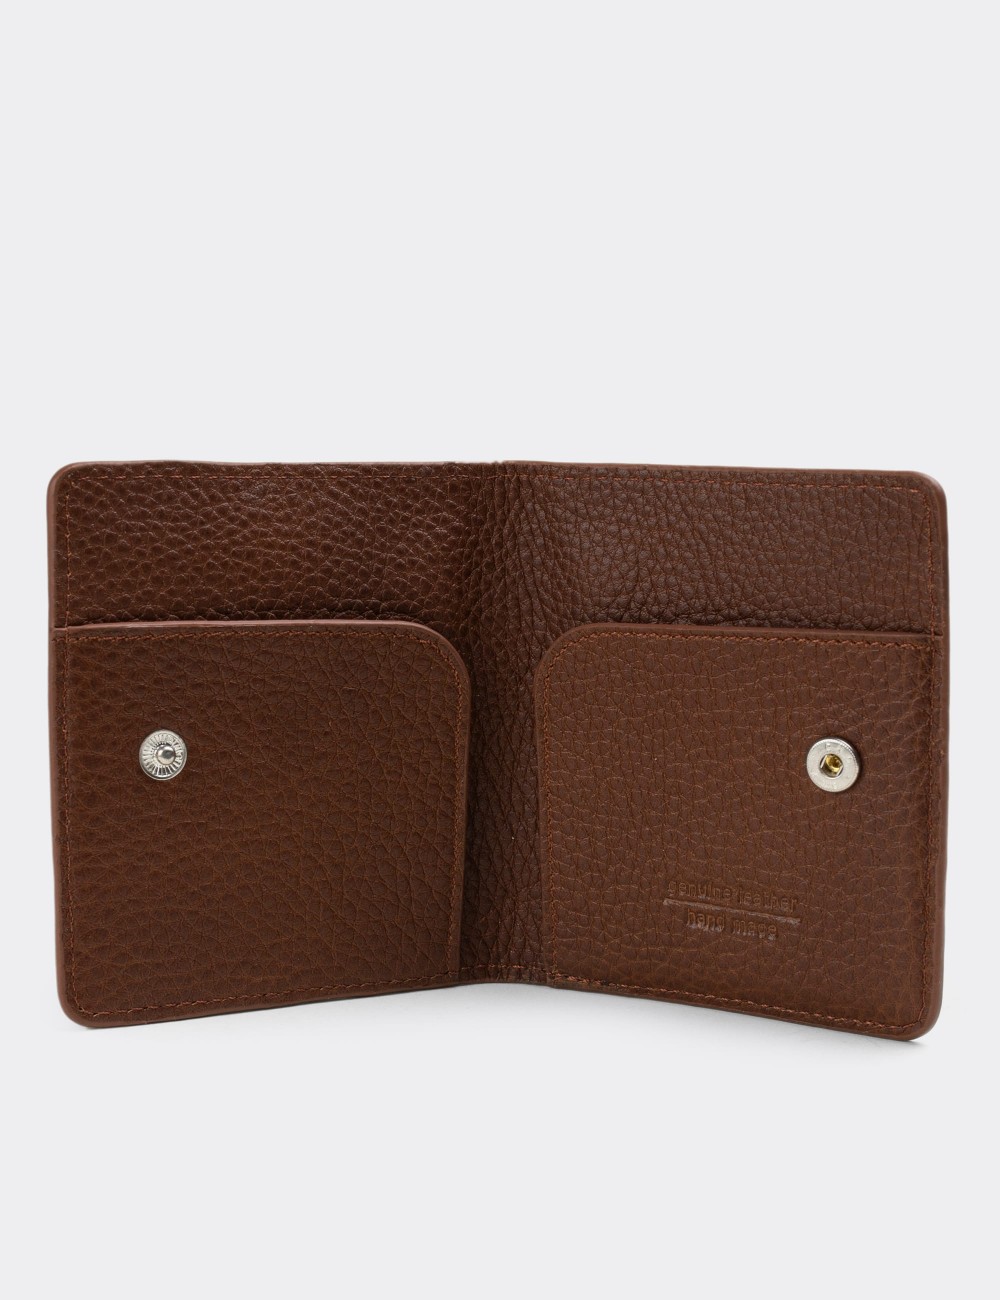  Leather Tan Men's Wallet - 00512MTBAZ01